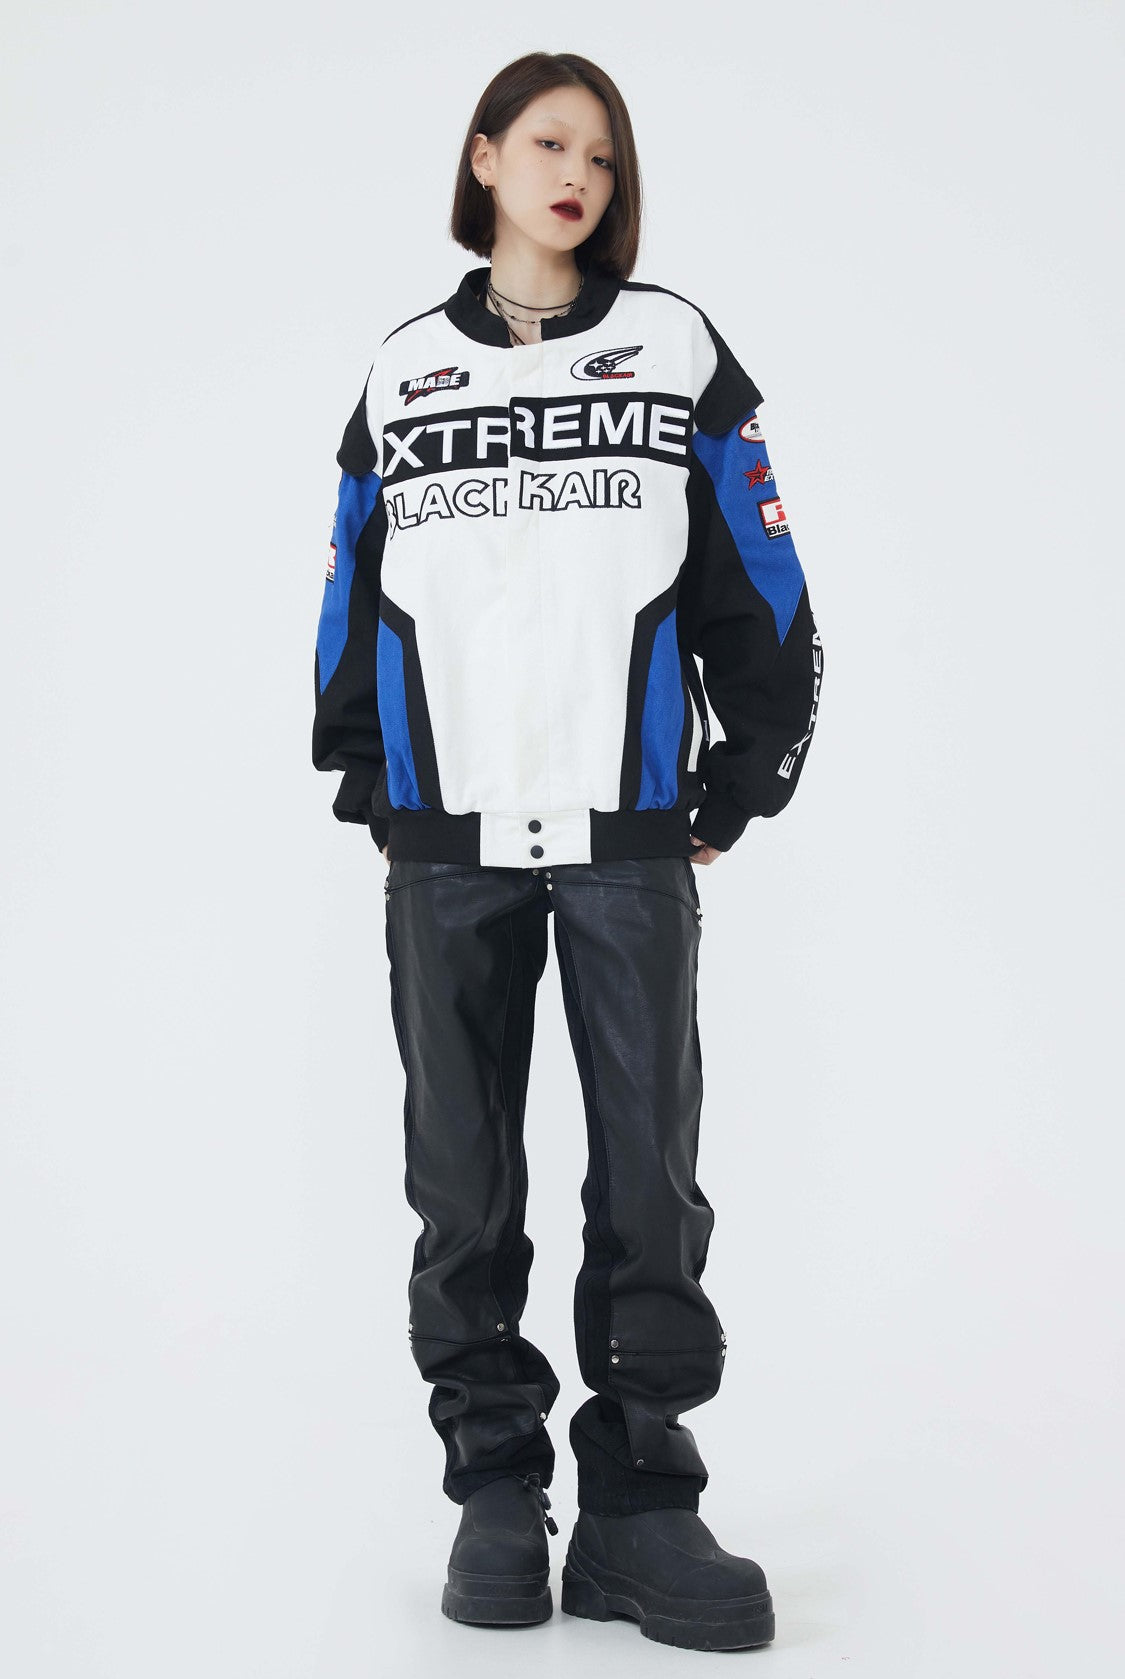 Black Air Motorsport Jacket Korean Street Fashion Jacket By Made Extreme Shop Online at OH Vault